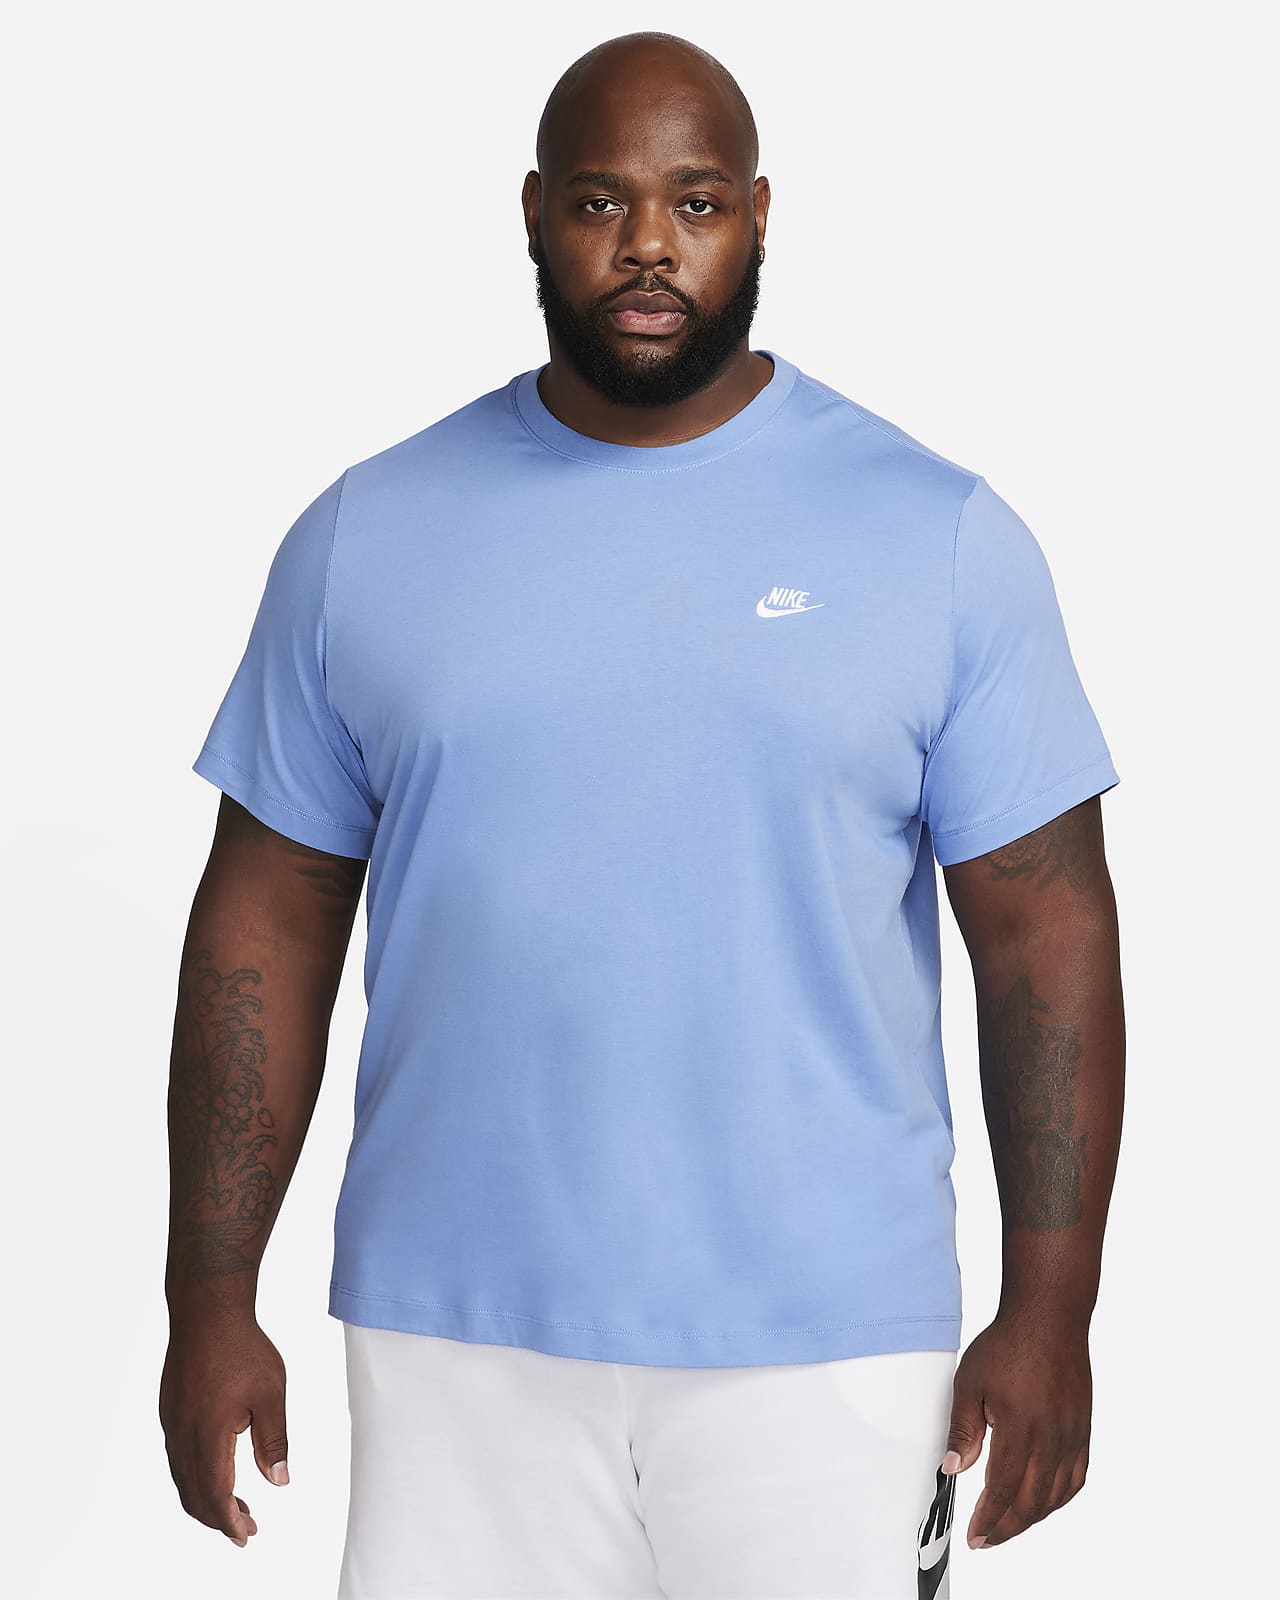 Men's Nike Air Max Gel T Shirt Short Sleeve Cotton Crew Neck